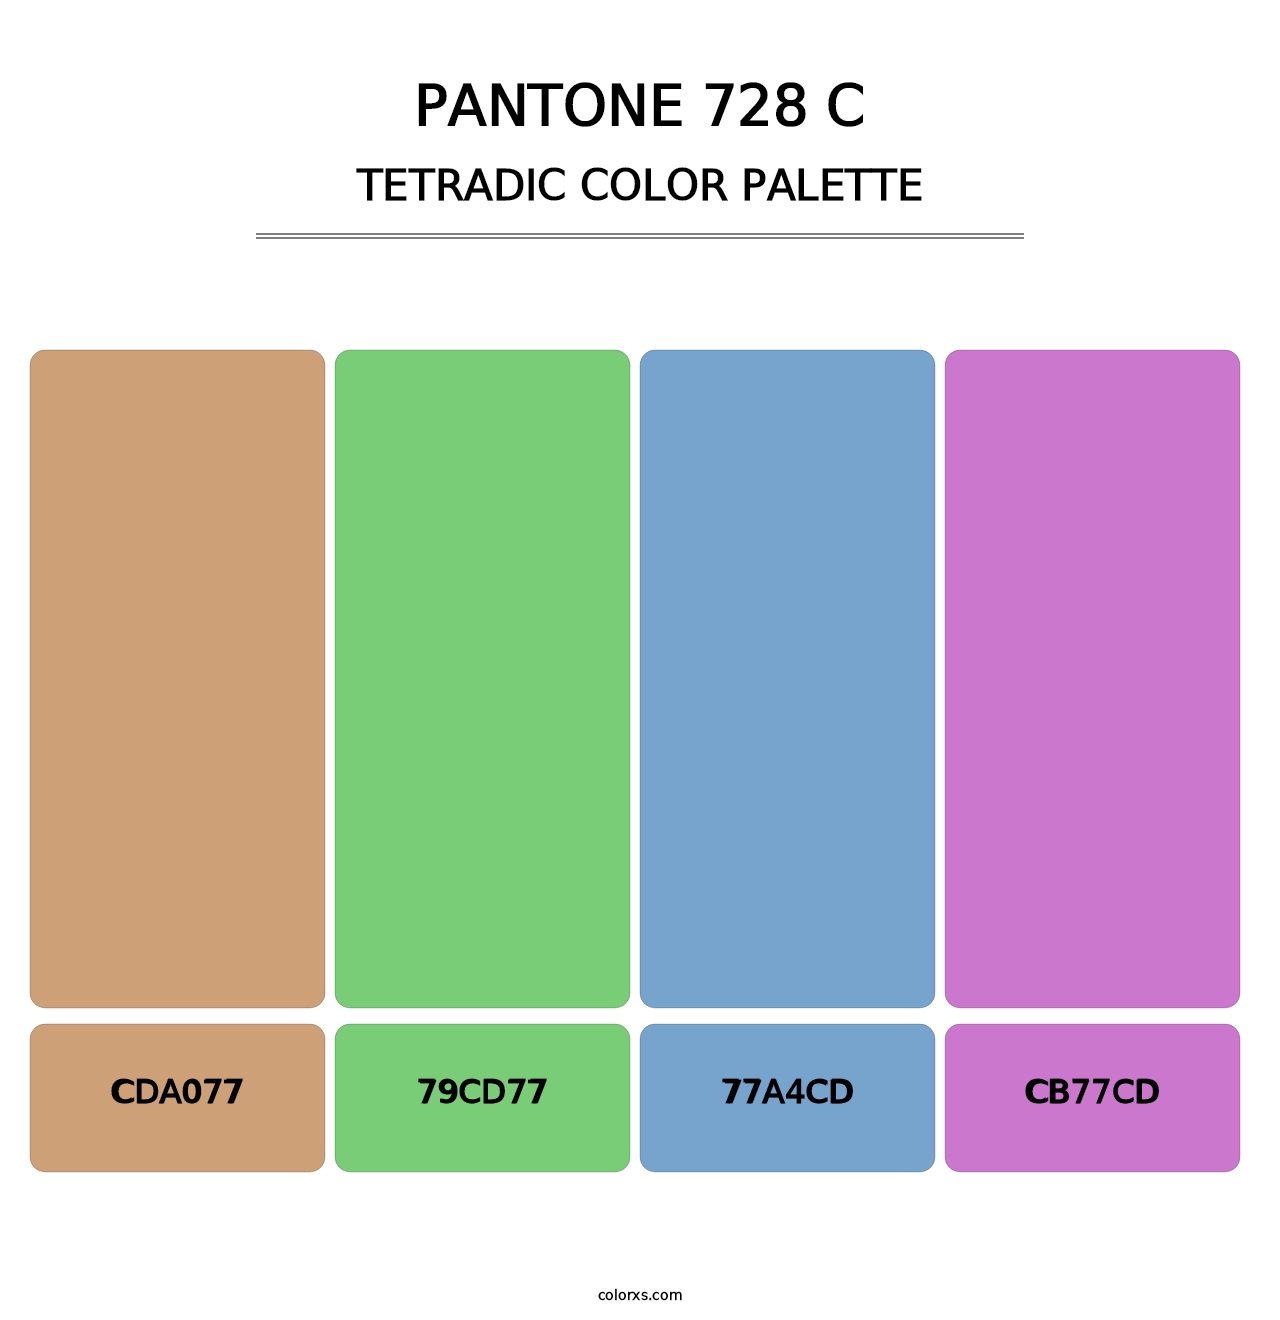 PANTONE 728 C - Tetradic Color Palette